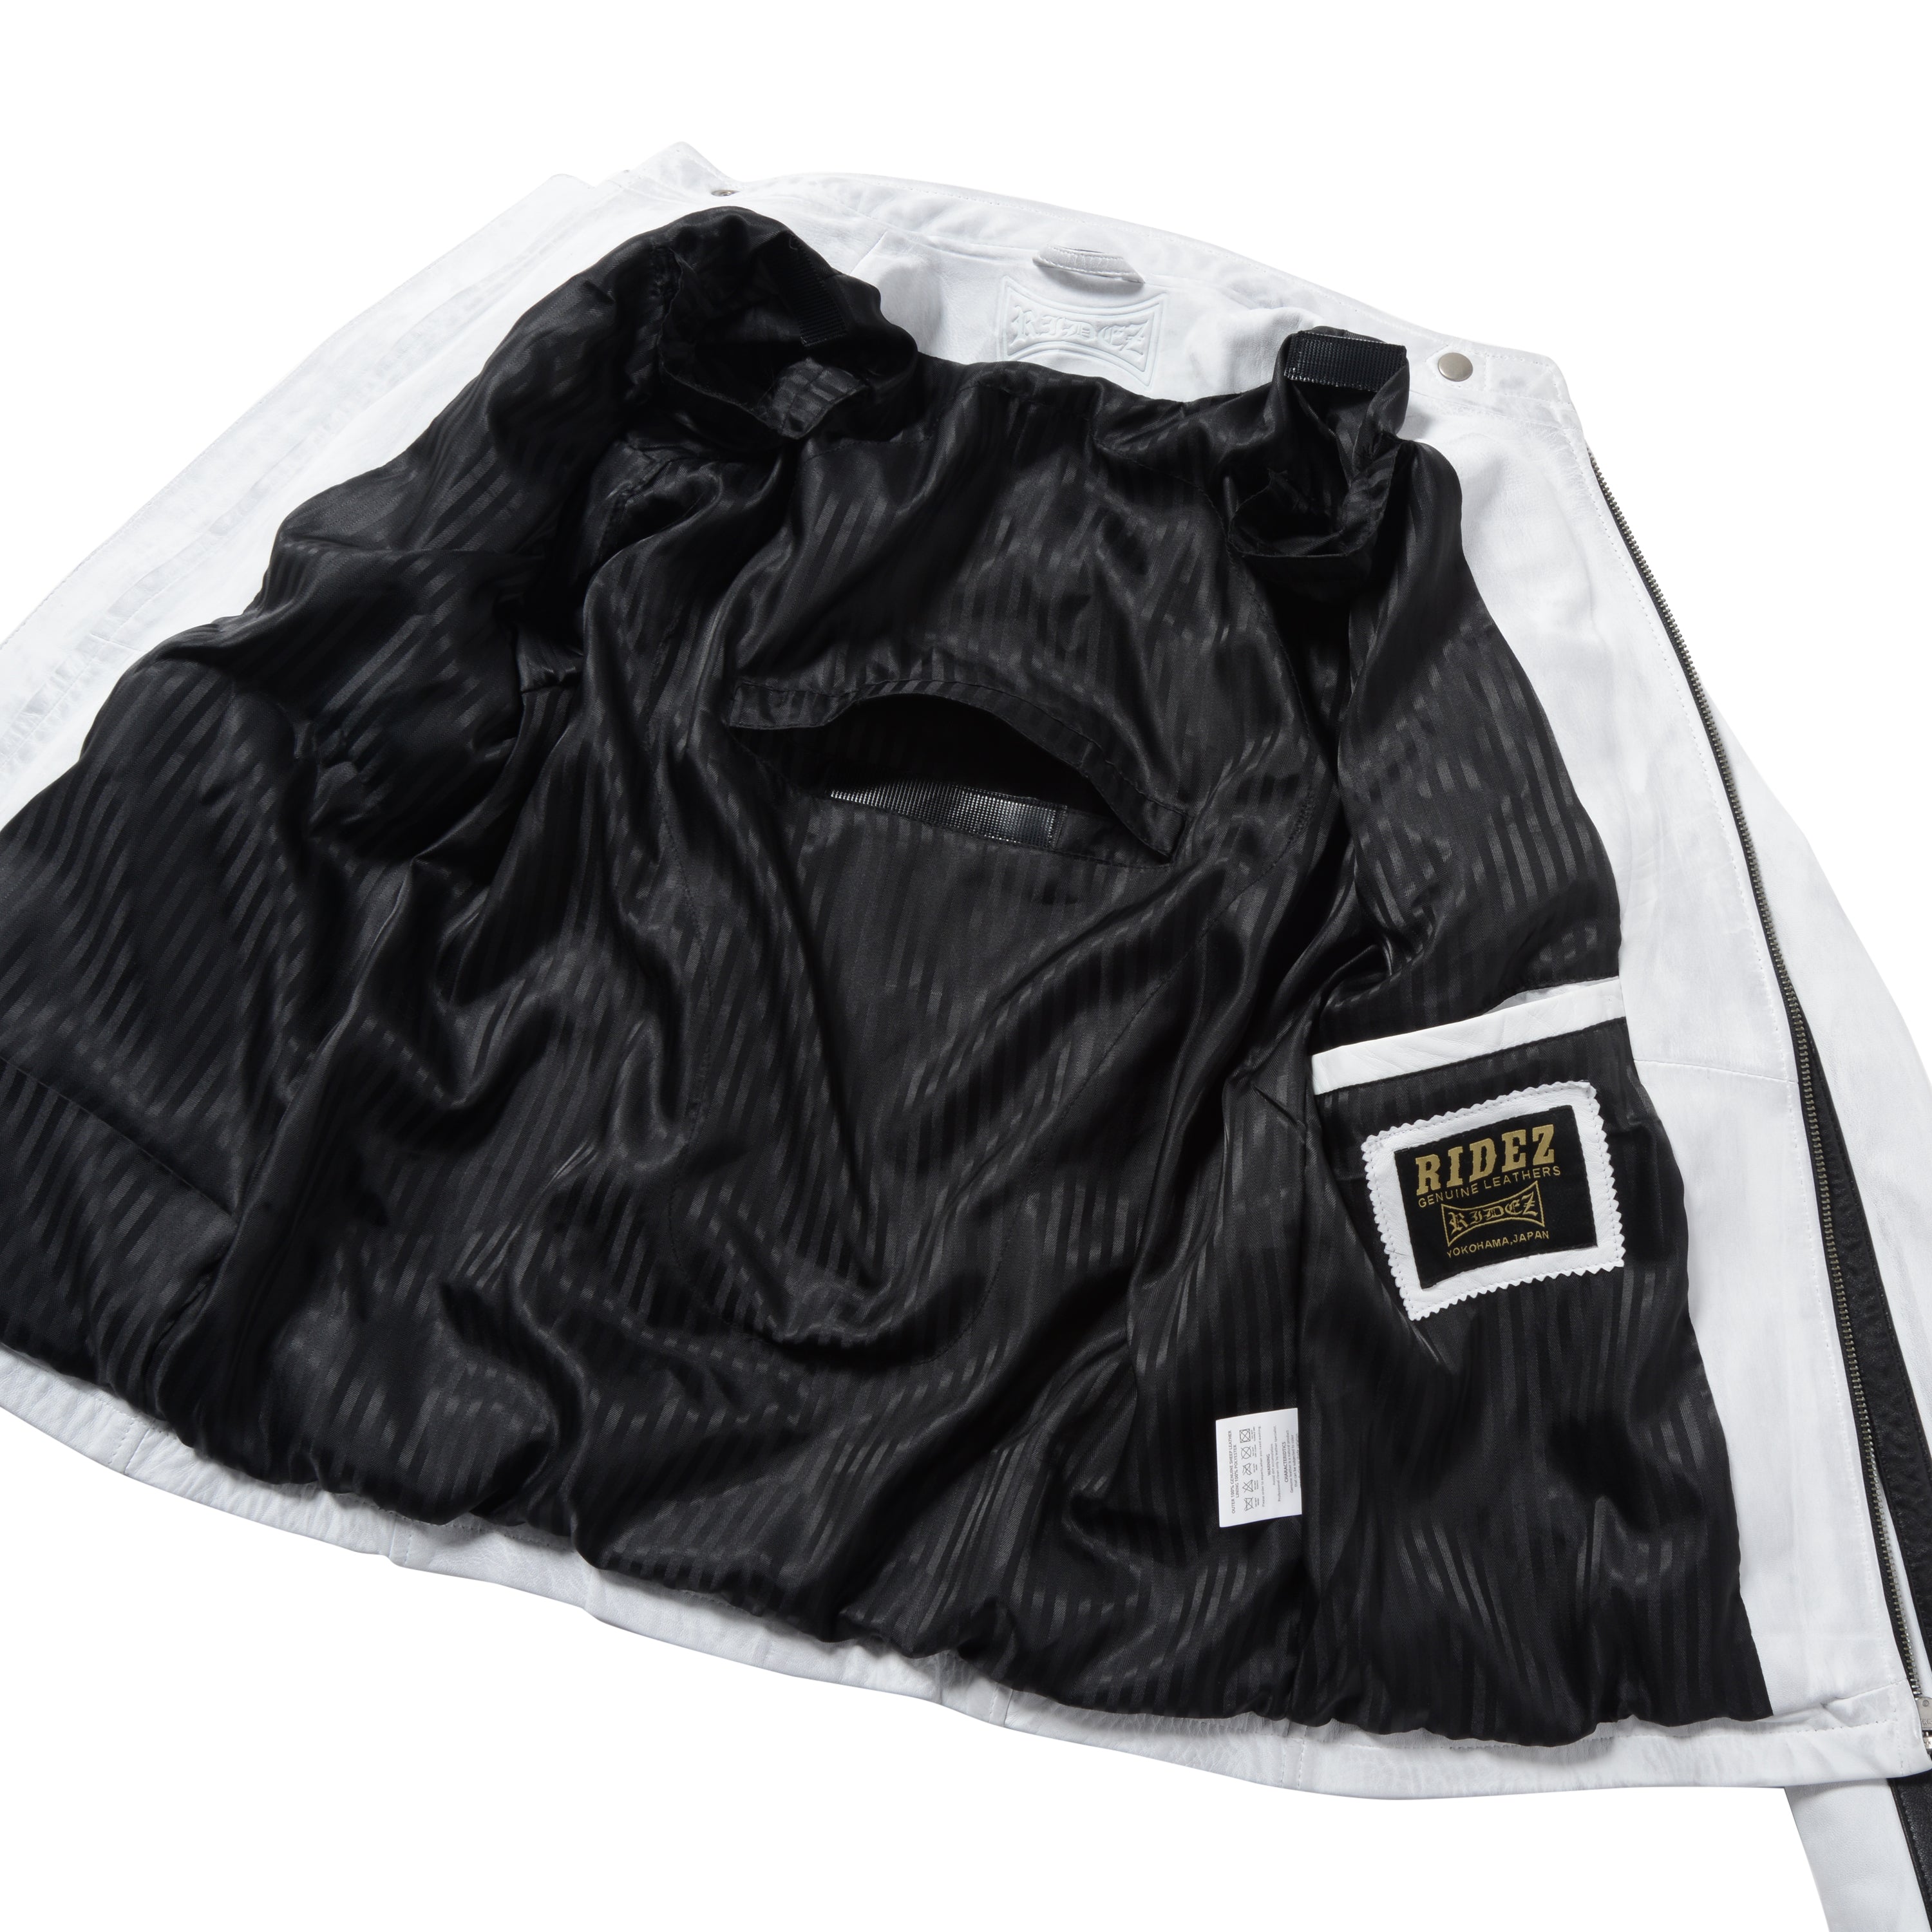 RIDEZ COMP JACKET WHITE/BLACK  RLJ1101 ライダースジャケット